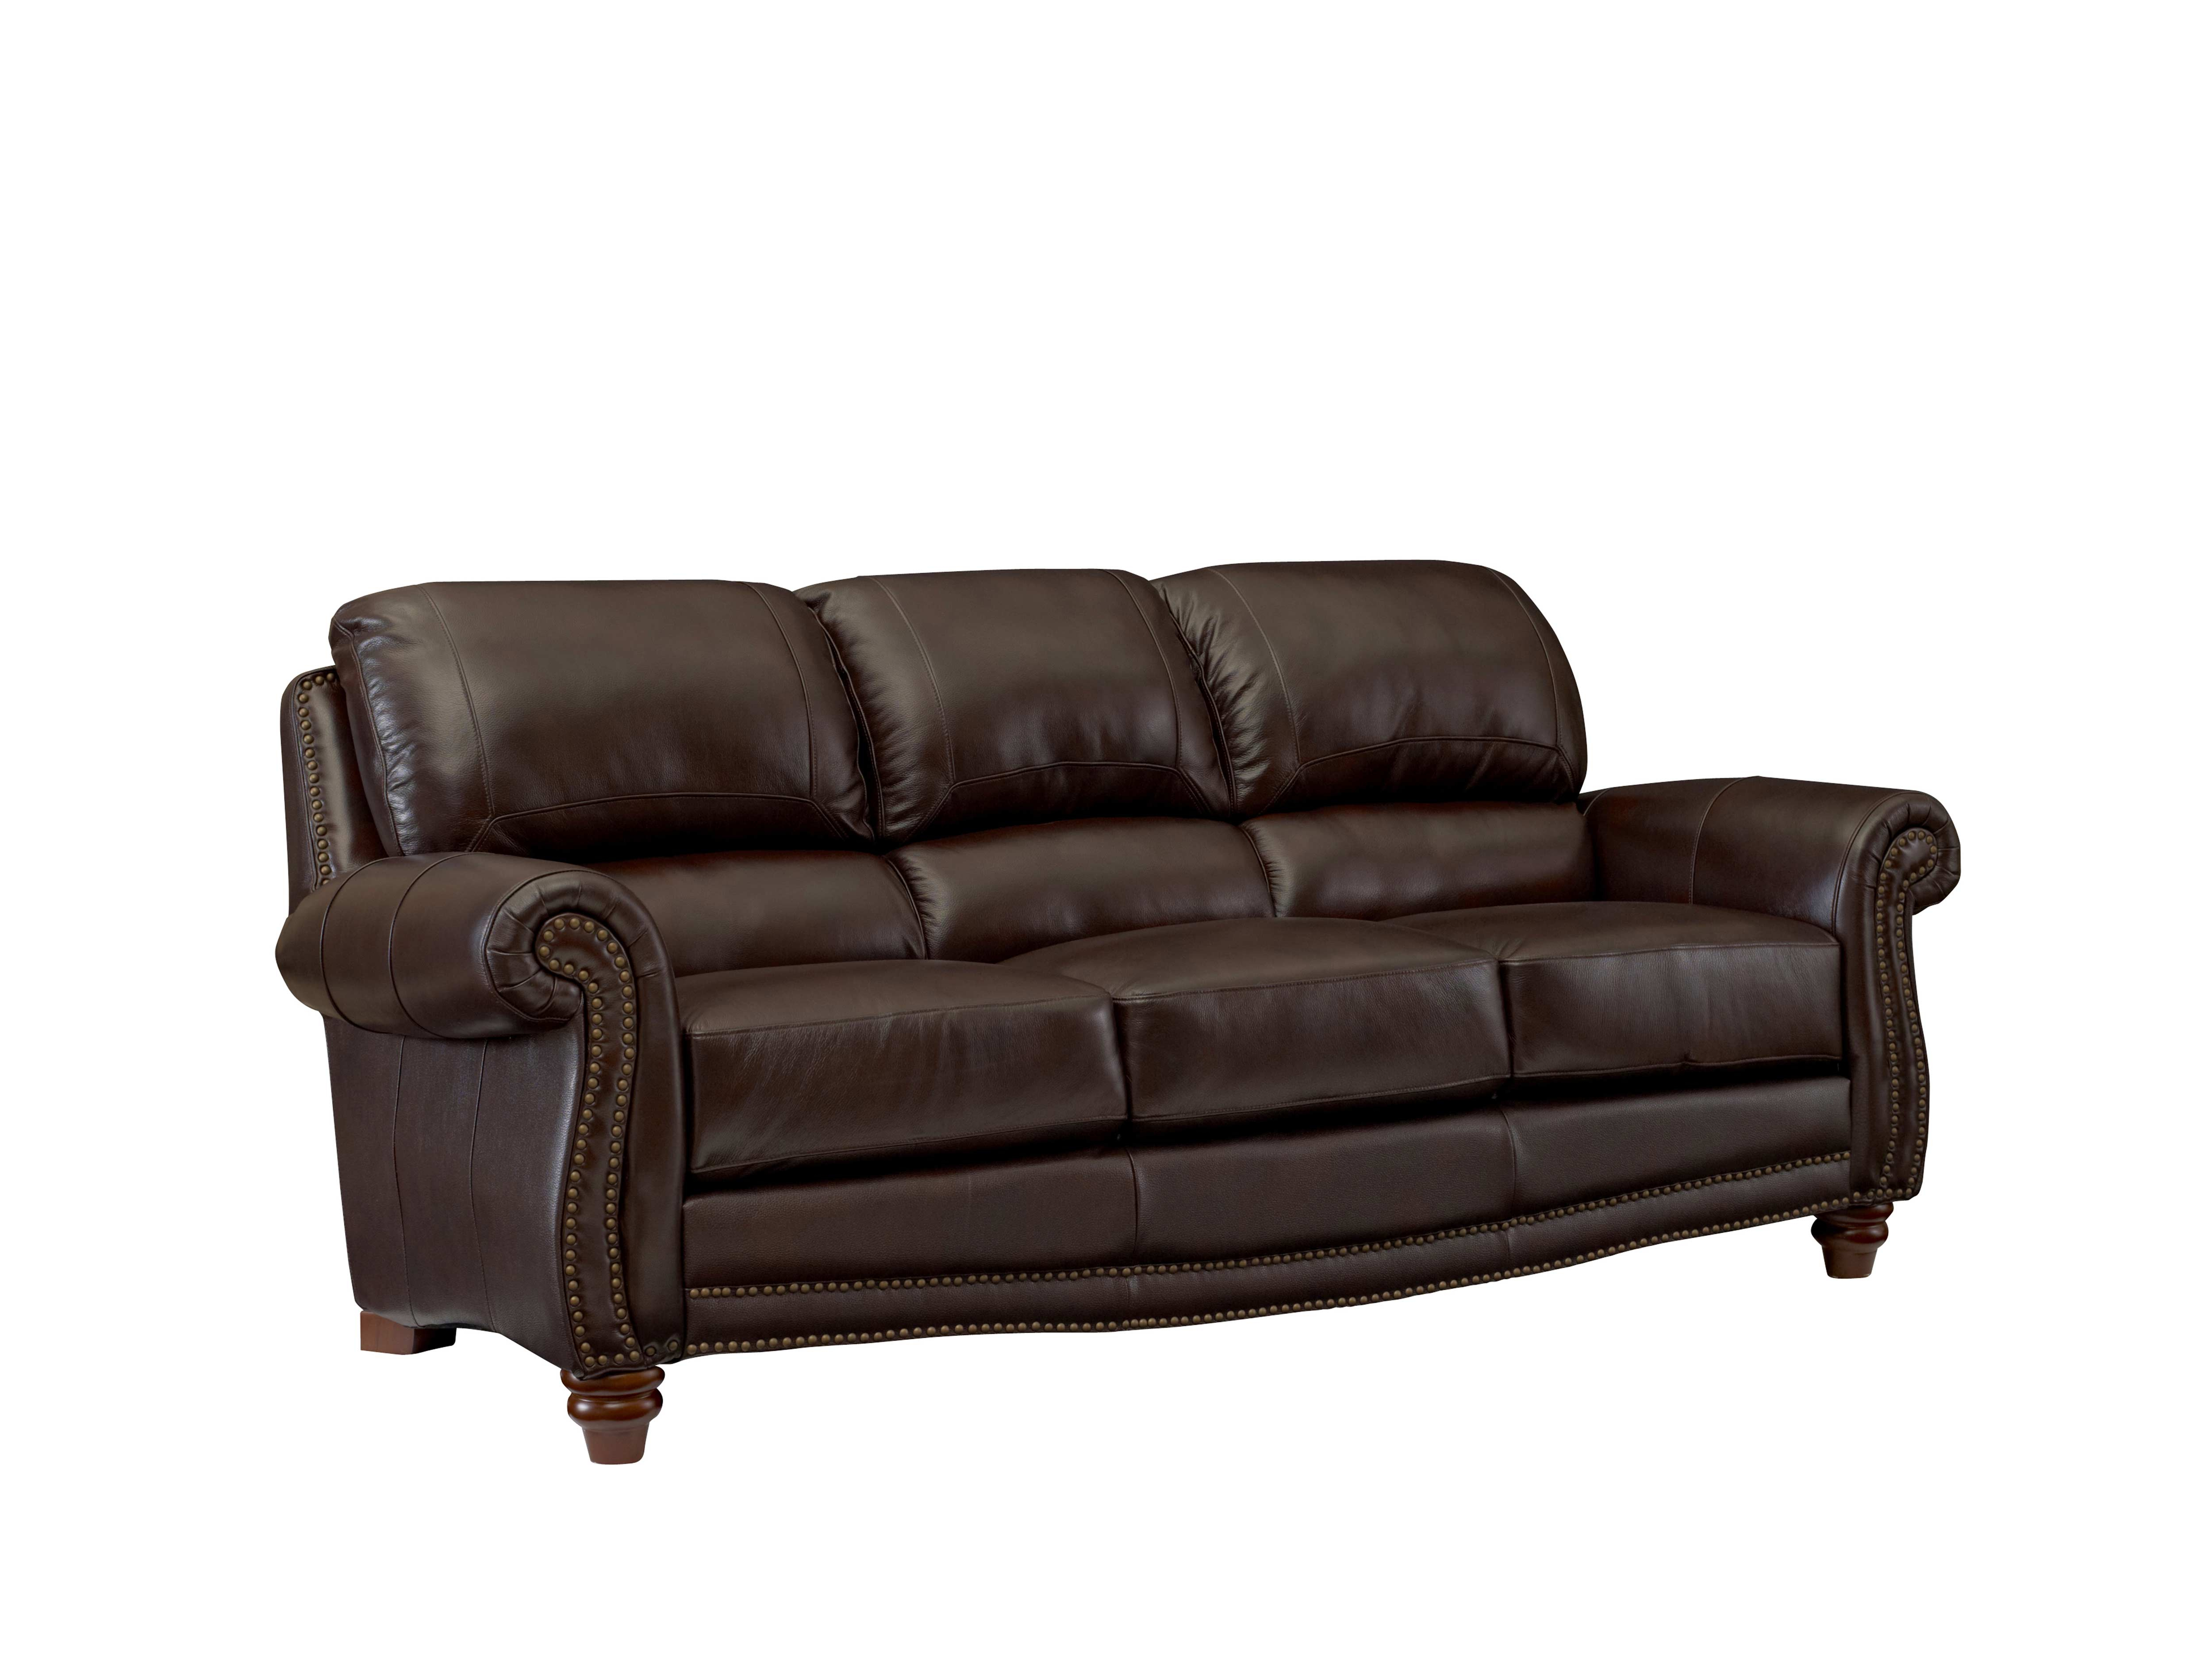 leather italia james leather sofa in tobacco s9922